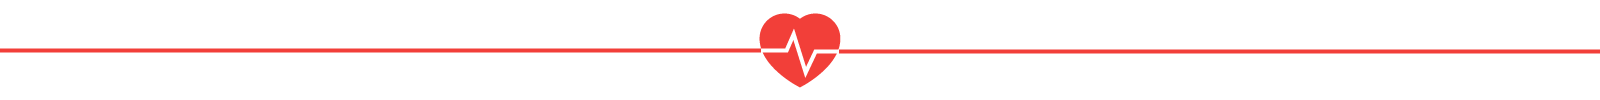 heart monitor banner